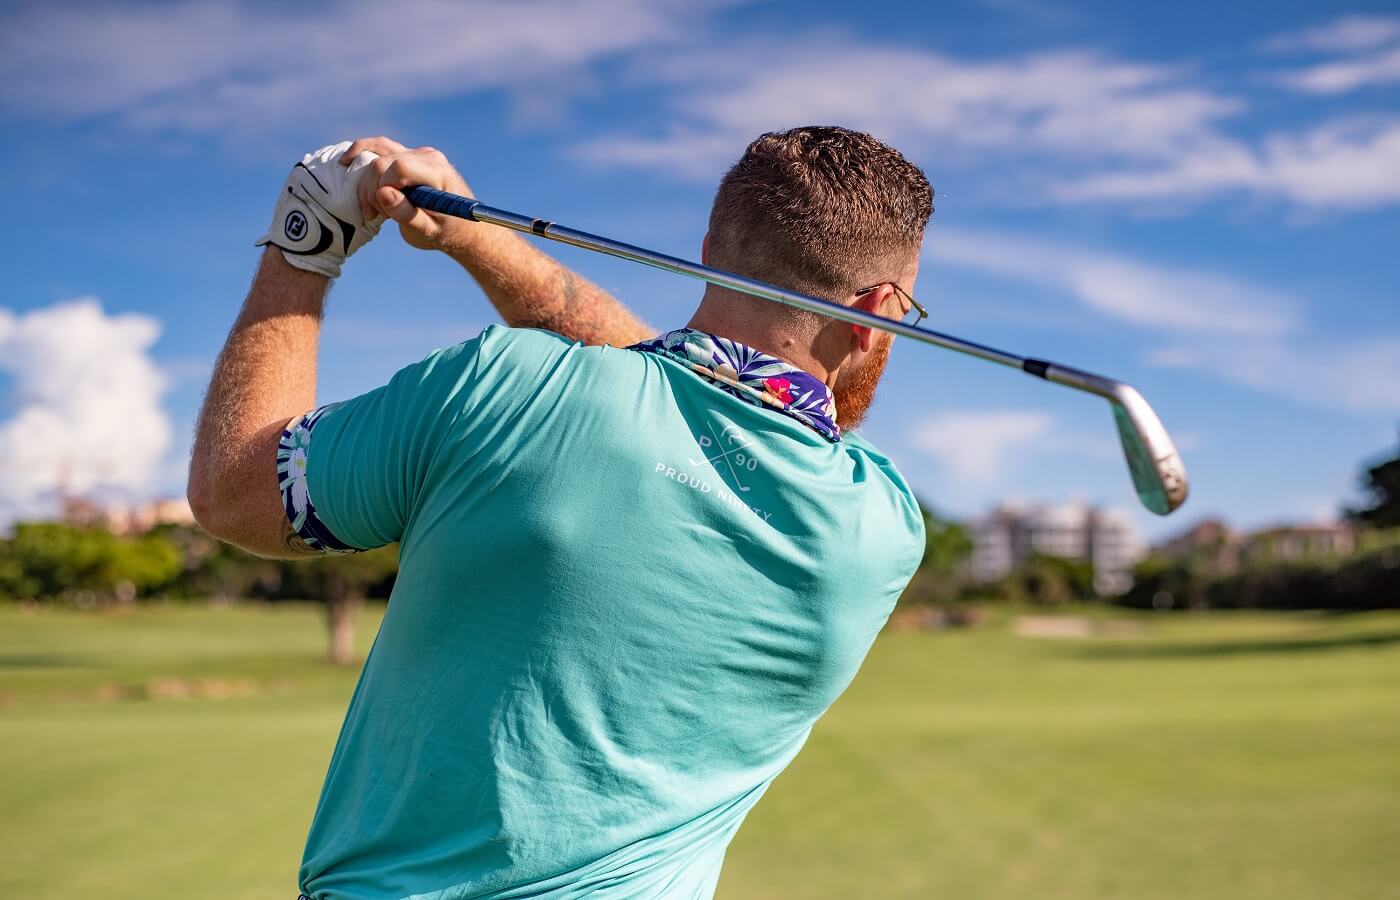 https://golf.com/wp-content/uploads/2023/03/Best-Golf-Gifts-for-Men-in-2023-featured-image_pexels-1.jpg